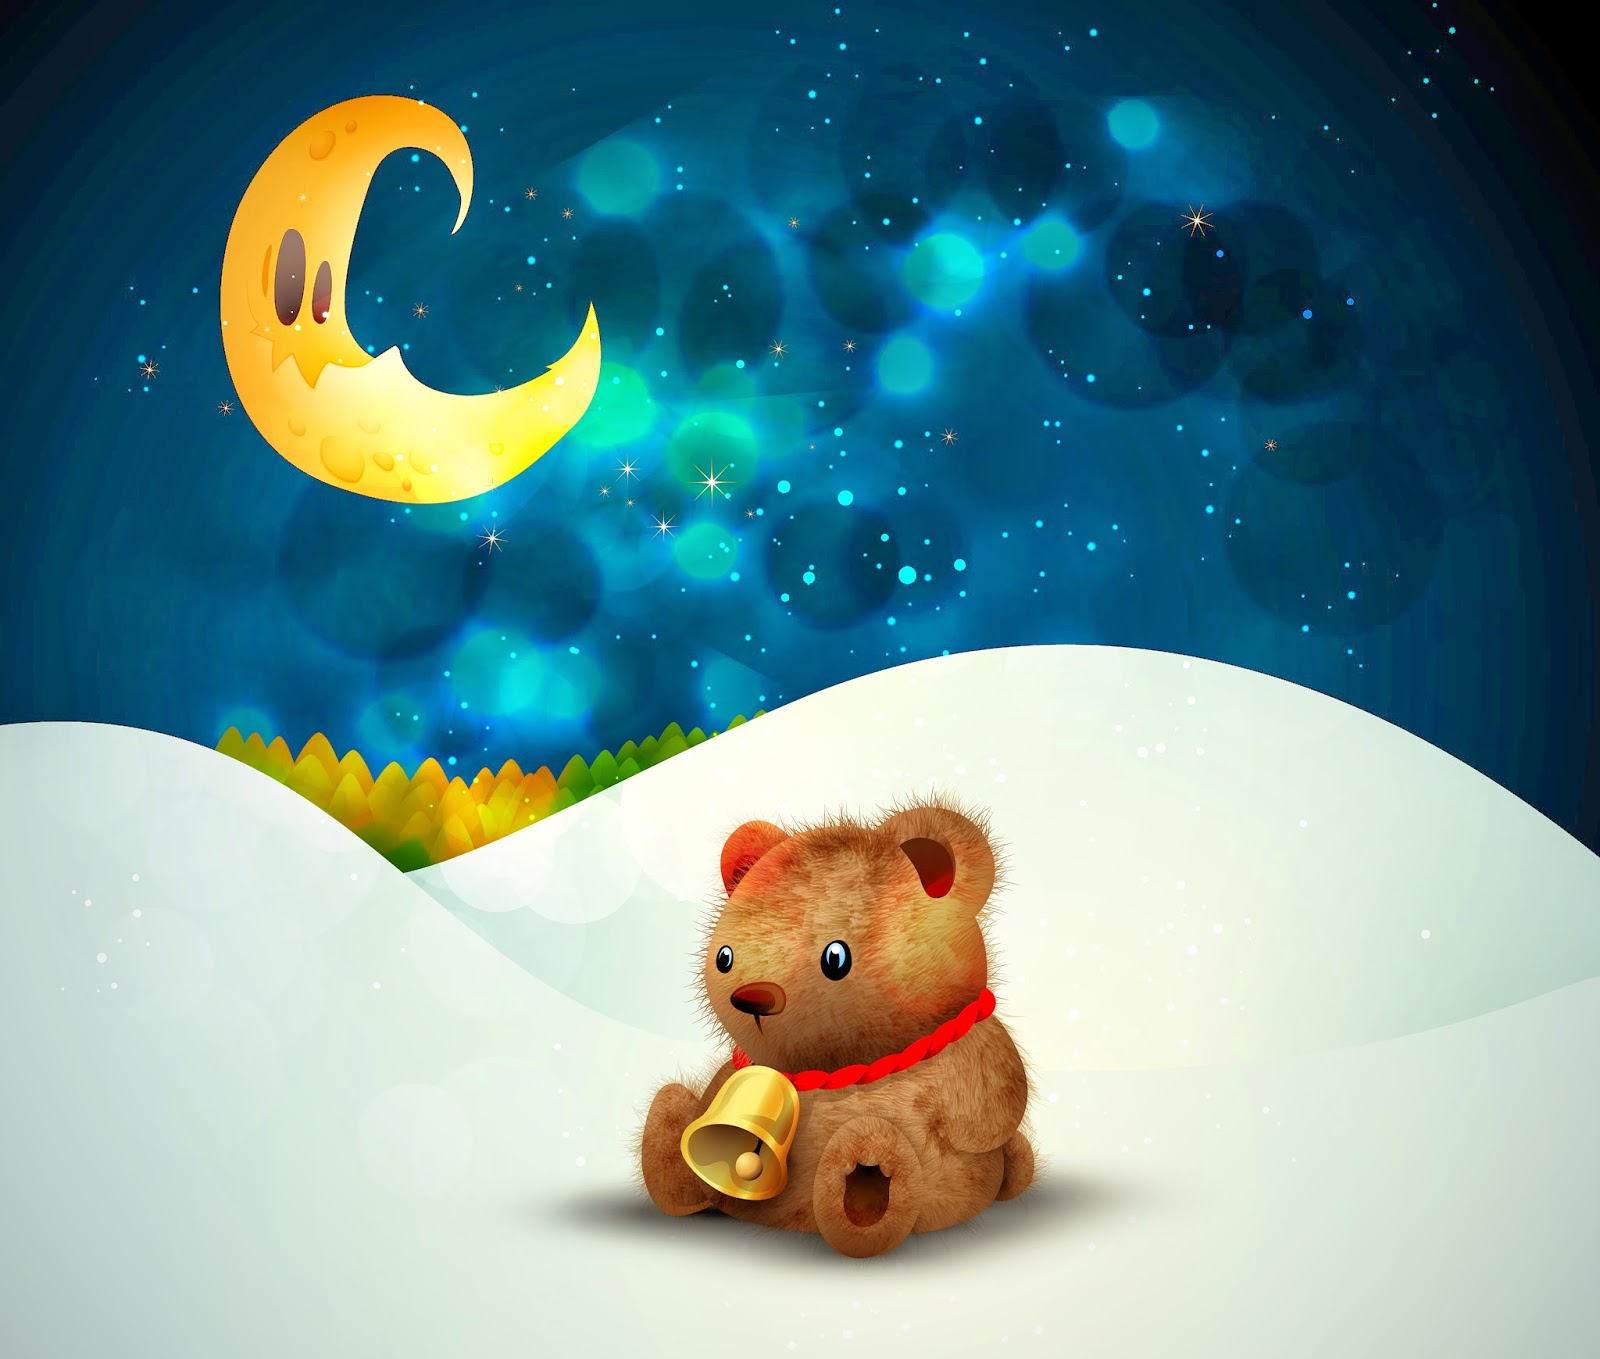 Cute Teddy Bear Wallpaper for little kids and children